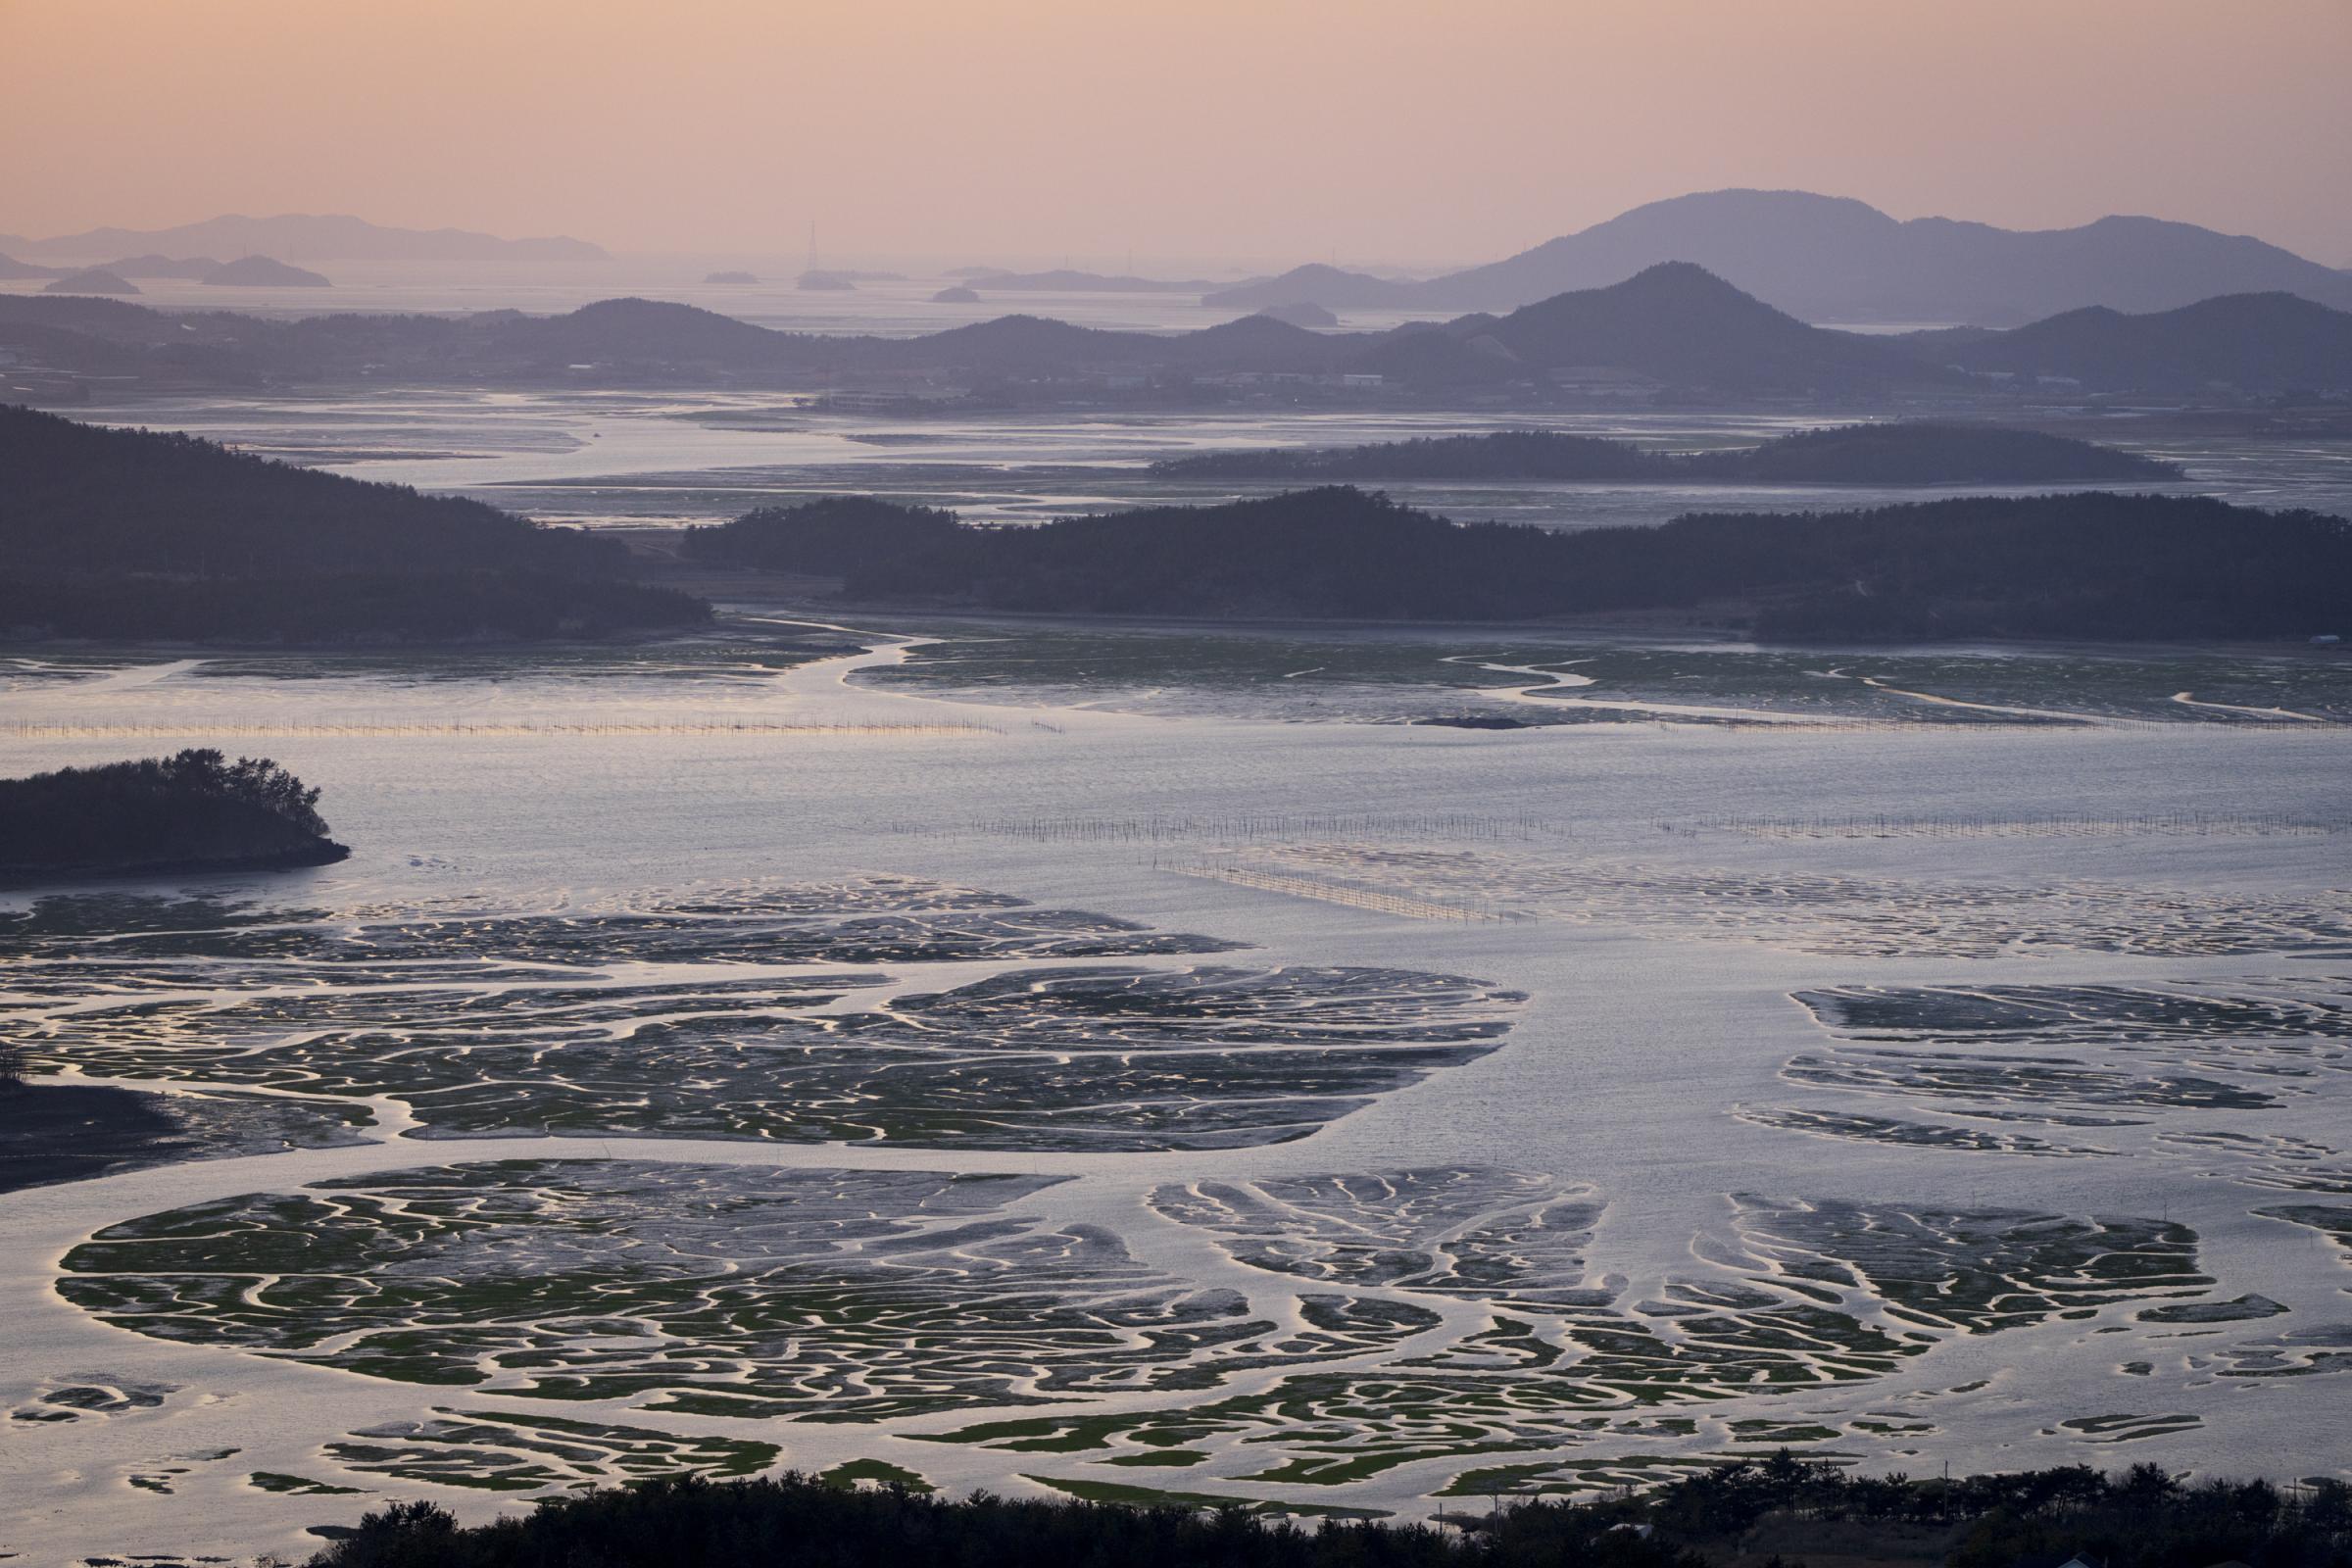 Saving South Korea's Tidal Flats - The sun sets over a tidal flat in southwestern South...